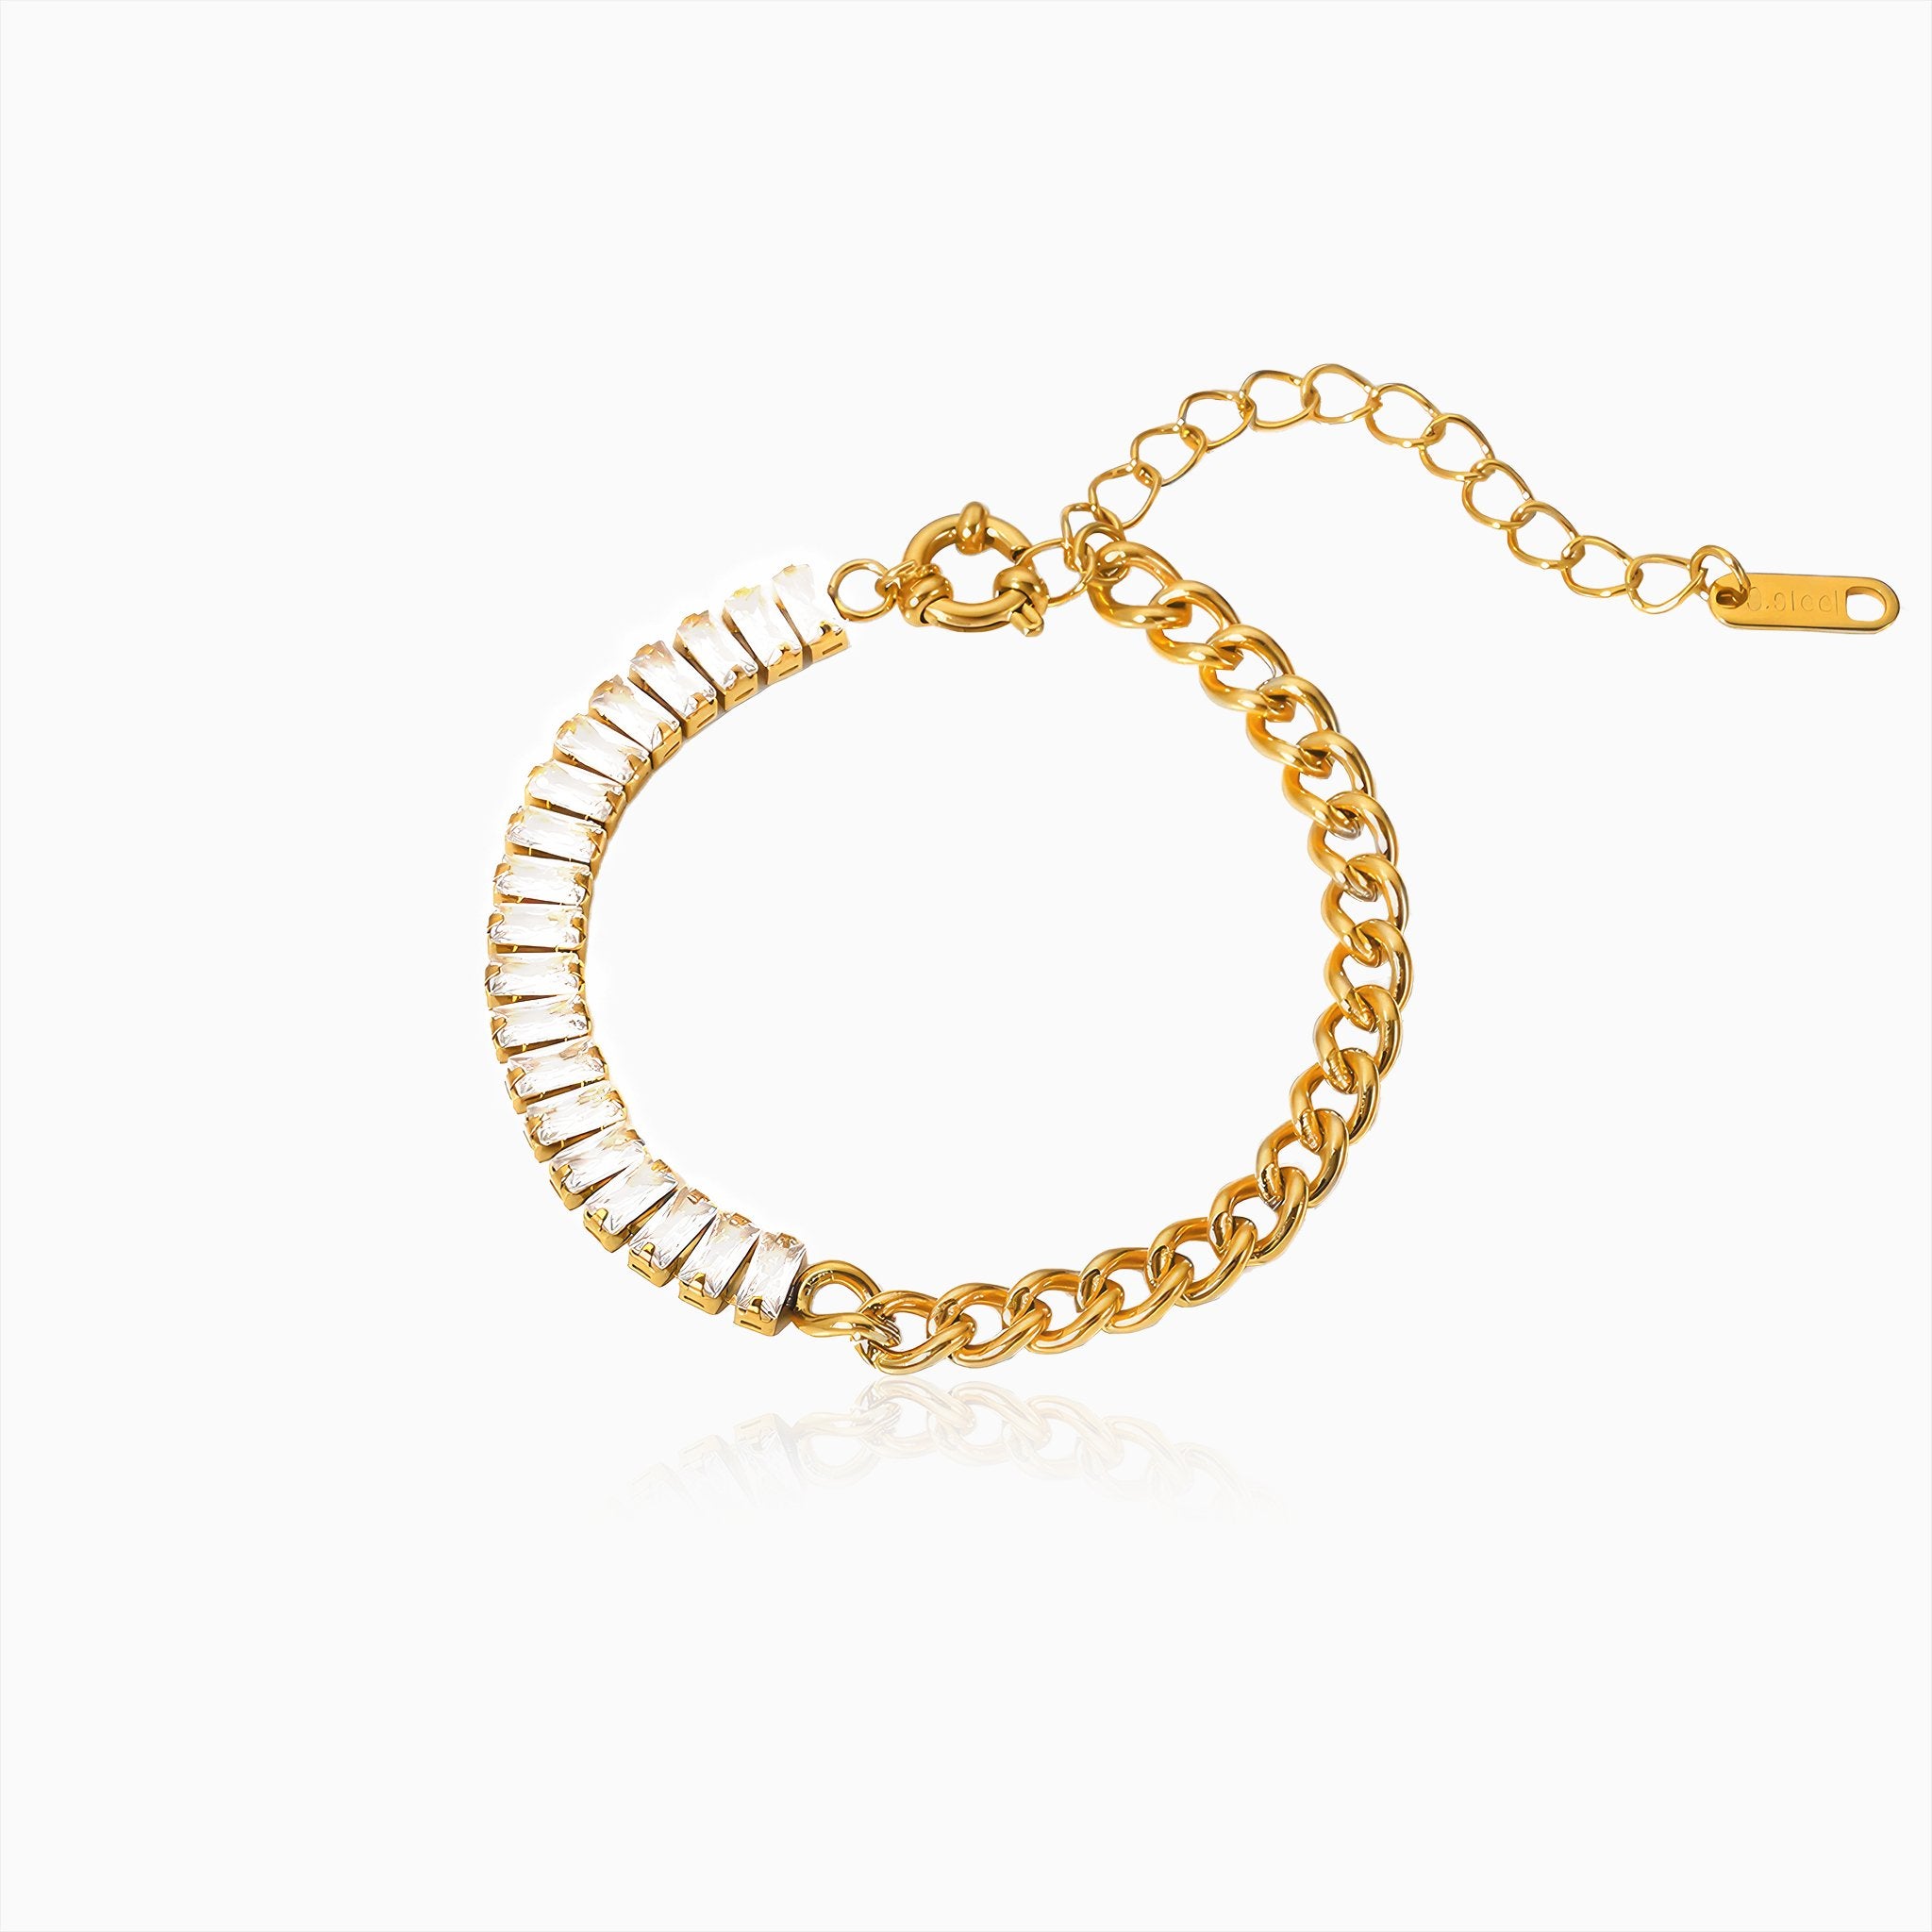 Gemstone Stitching Chain Bracelet - Nobbier - Bracelet - 18K Gold And Titanium PVD Coated Jewelry